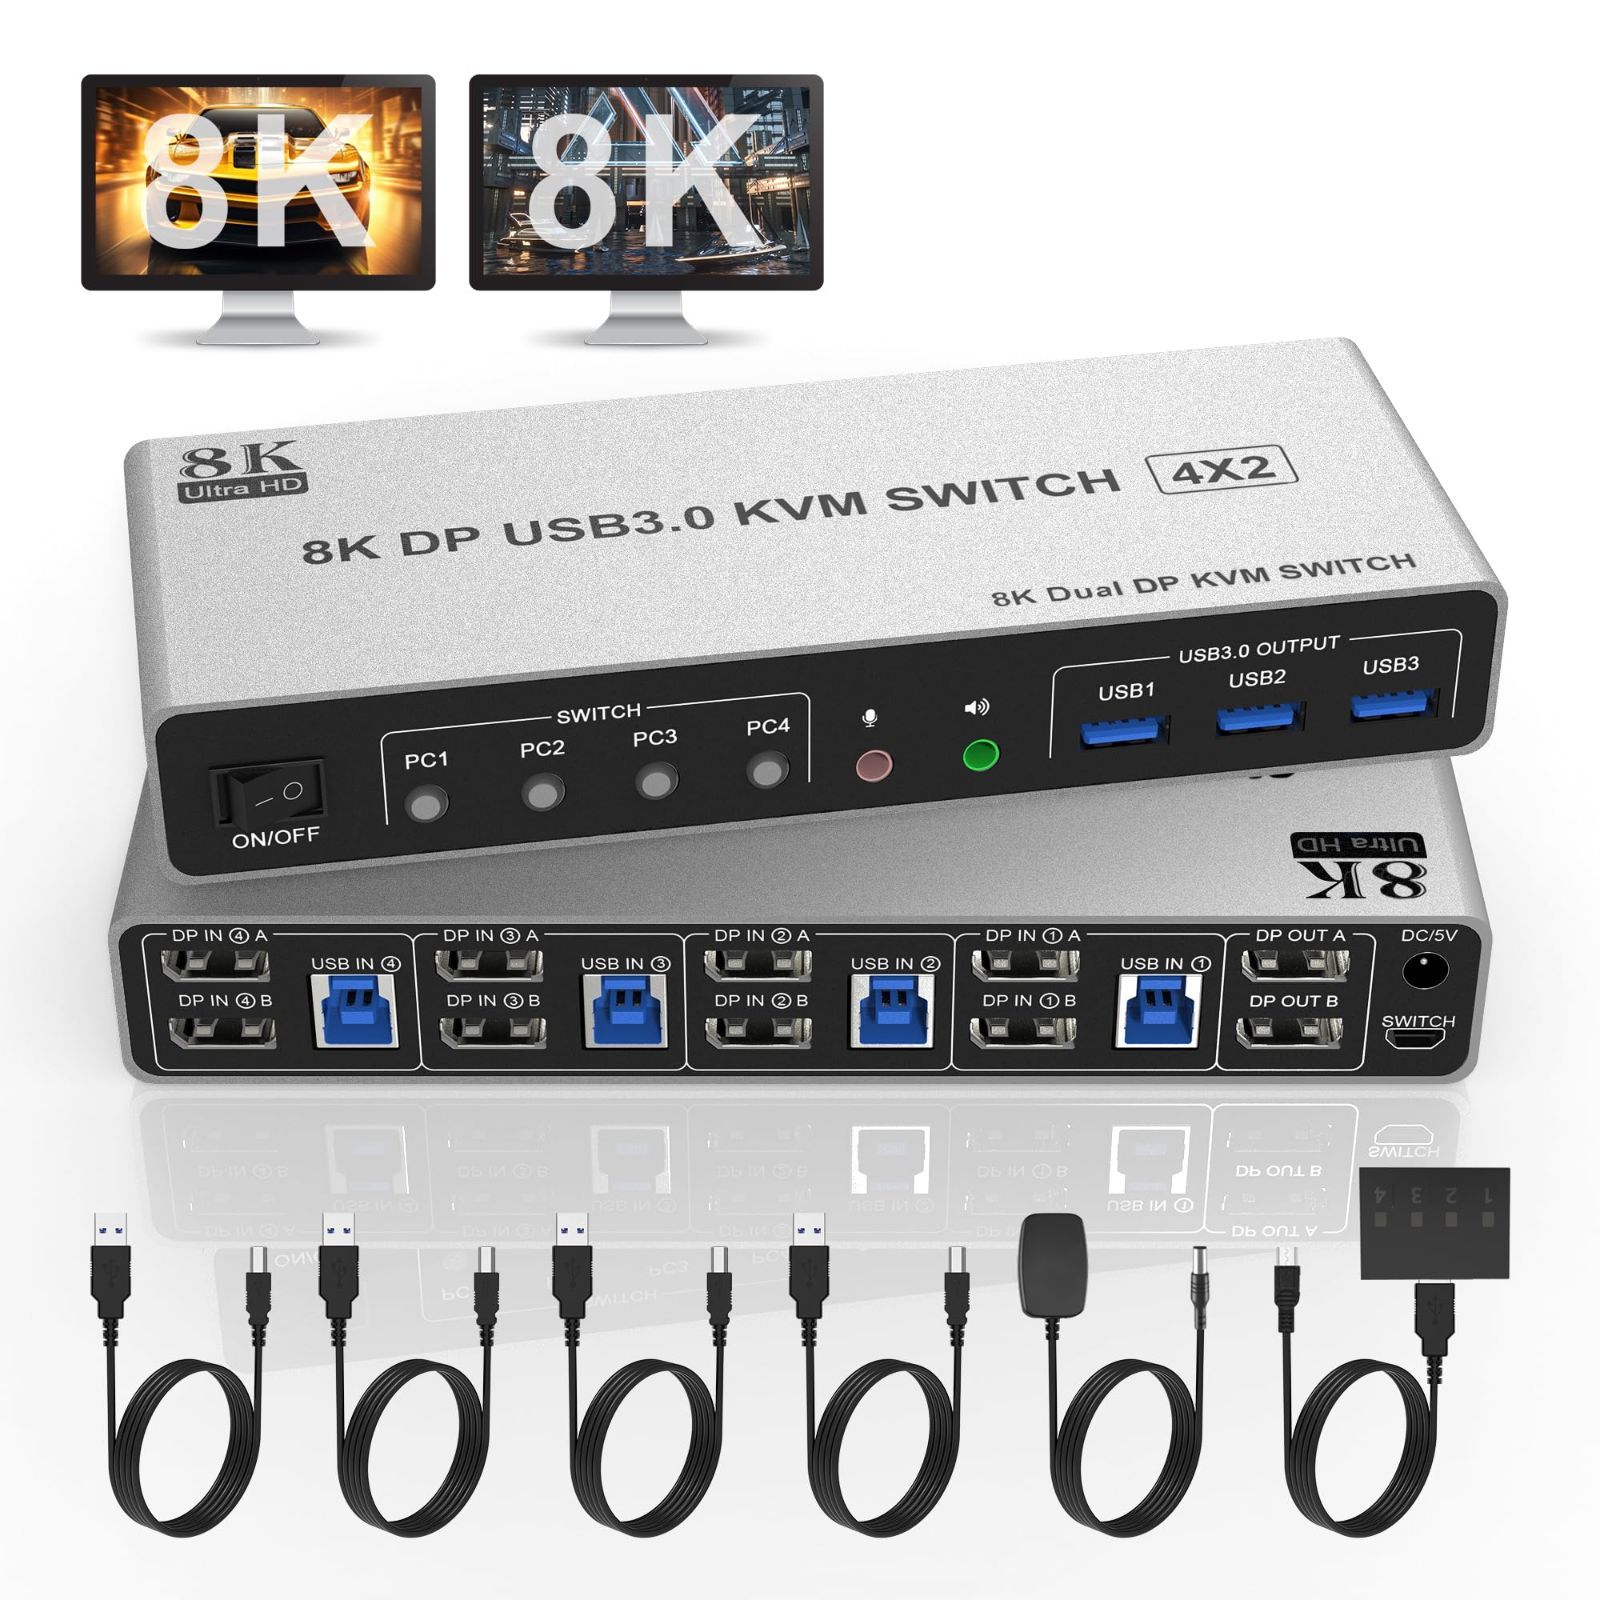 8K 4 PC 2 モニター (DP+DP) 8K@60Hz DisplayPort USB 3.0 デュアル